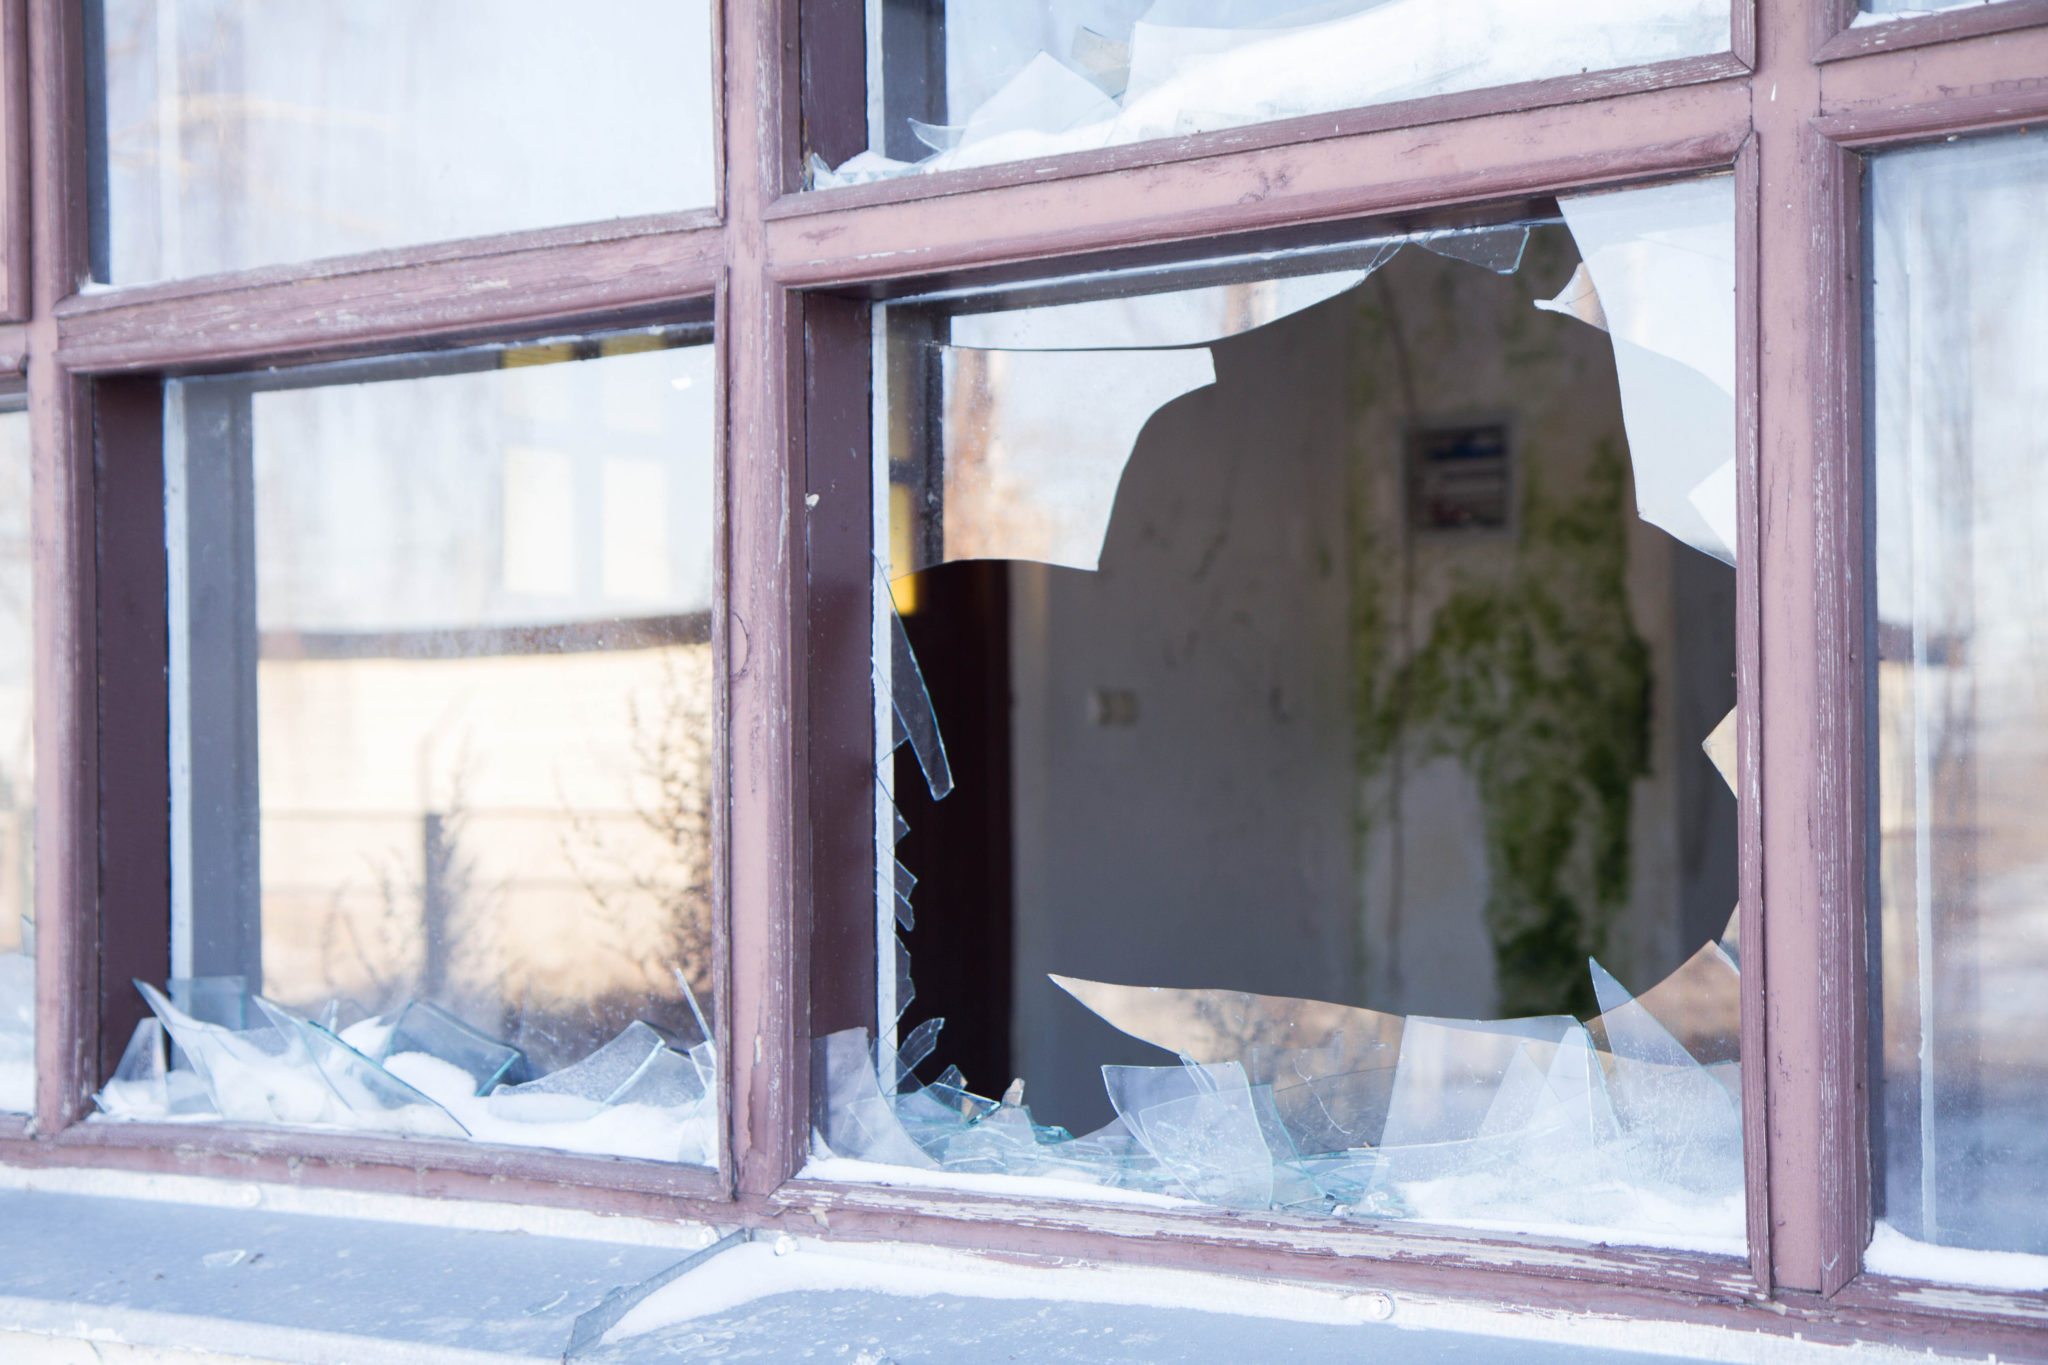 Разбил окно звук. Разбитое окно. Разбитые окна. Разбитые стеклопакеты. Разбитое стекло в окне.